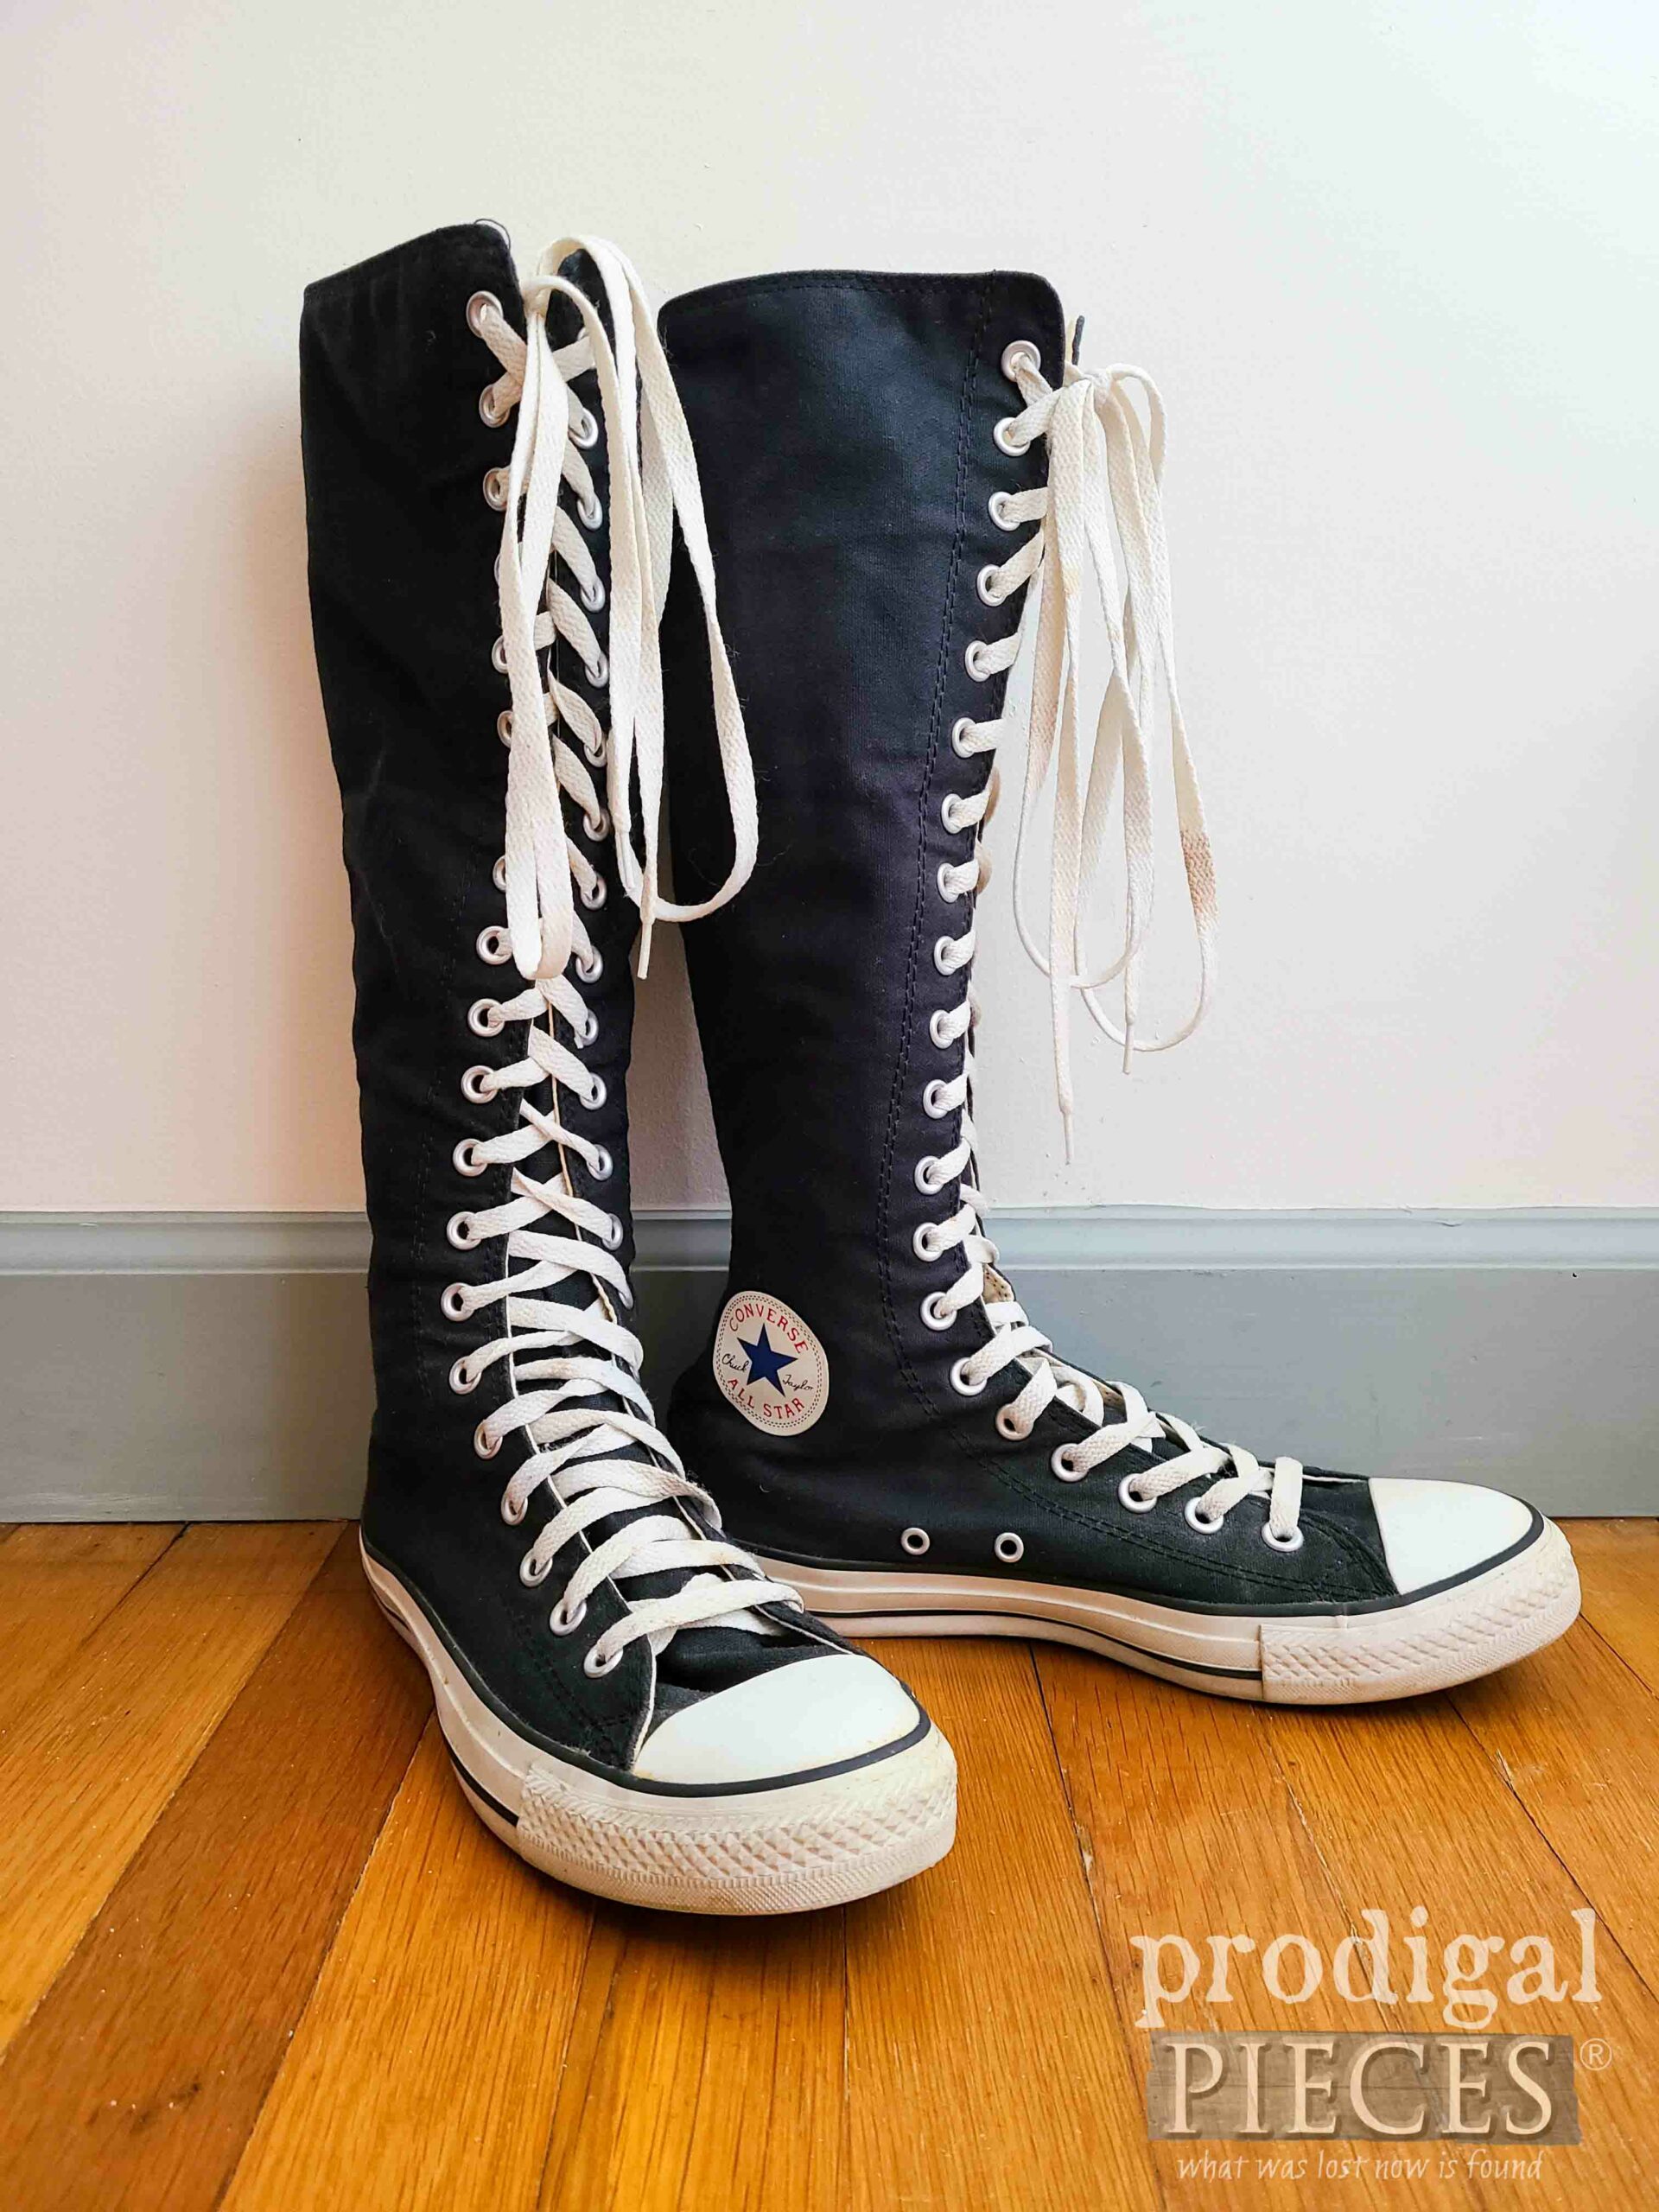 Knee High All Star Converse Chucks | My Barefoot Journey Intro | prodigalpieces.com #prodigalpieces